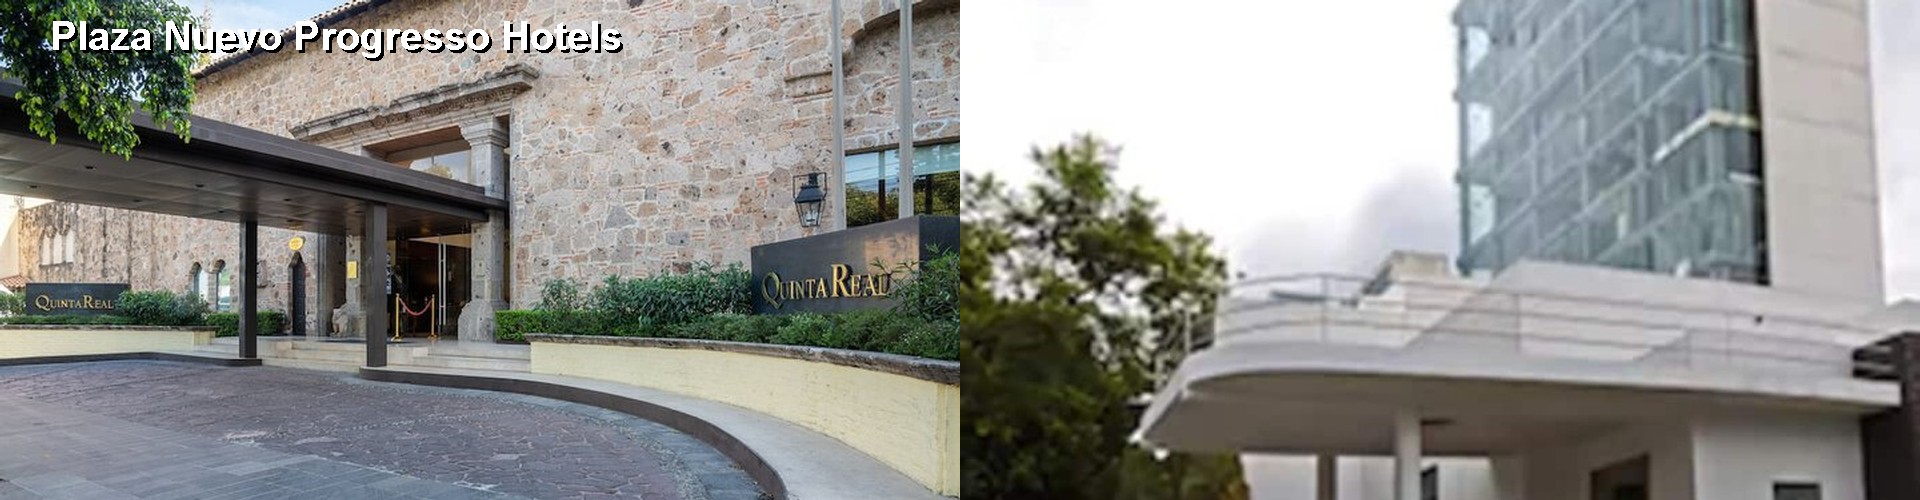 5 Best Hotels near Plaza Nuevo Progresso